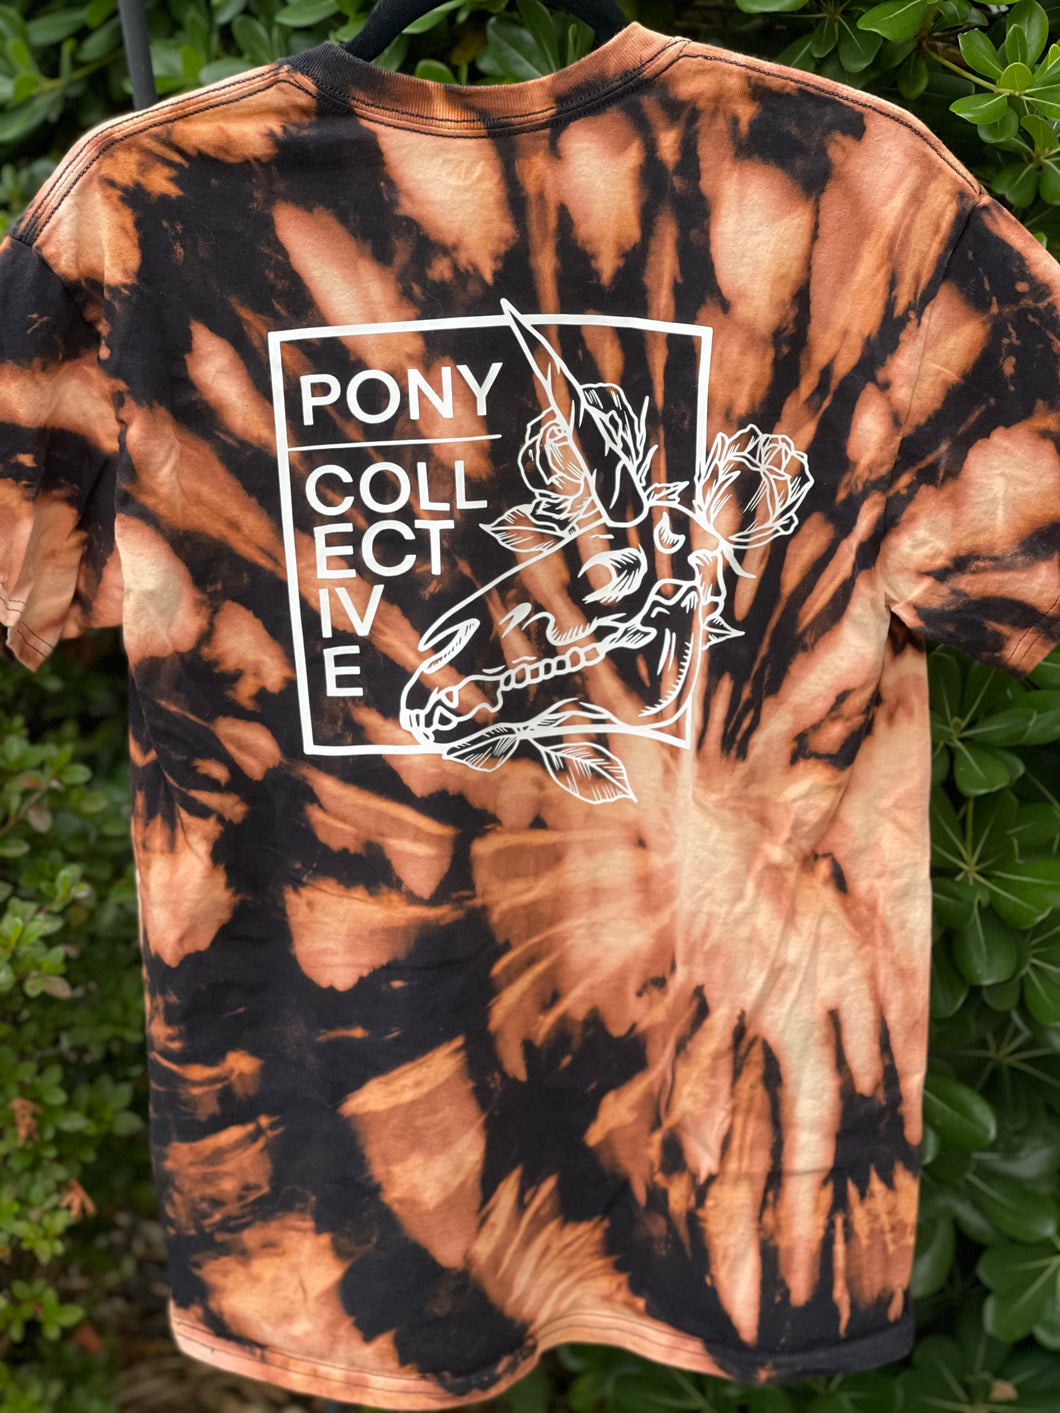 Acid Wash Pony Collective T-shirt